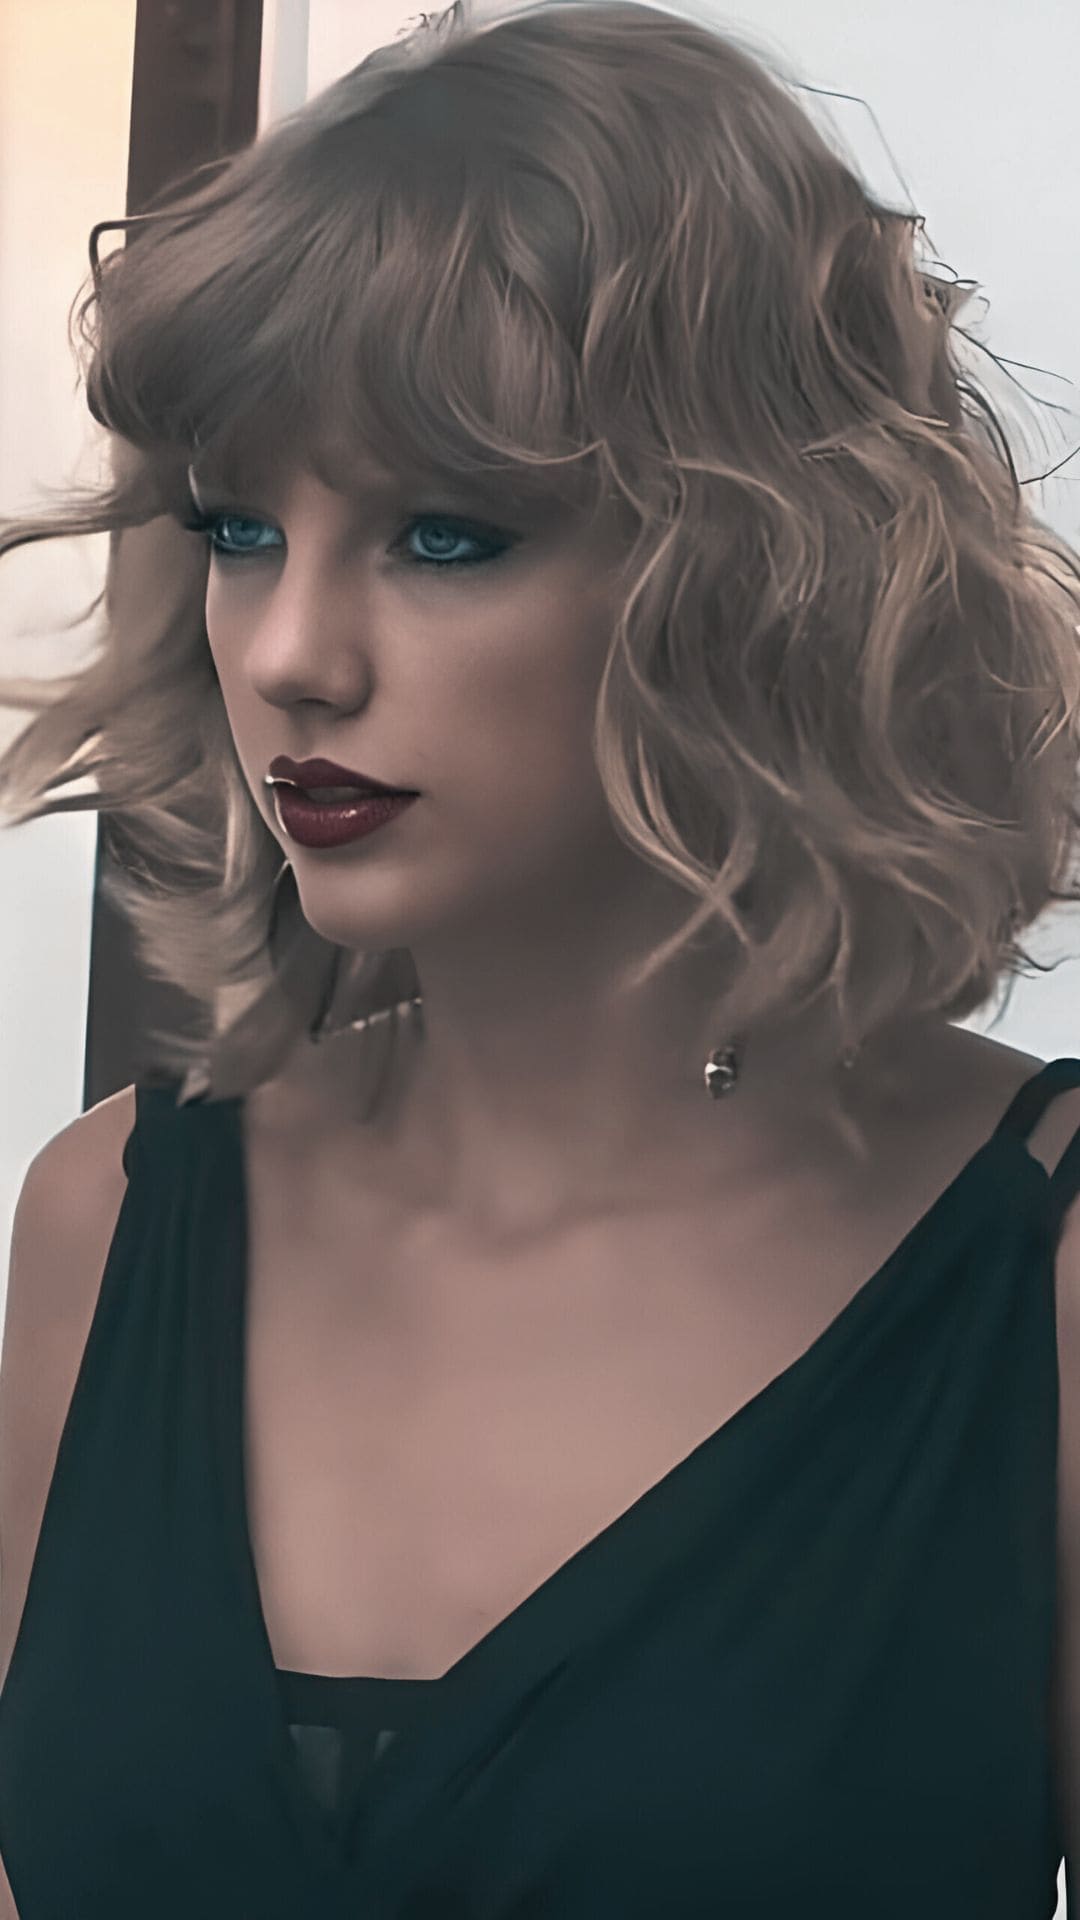 Taylor Swift Hot Look Wallpaper